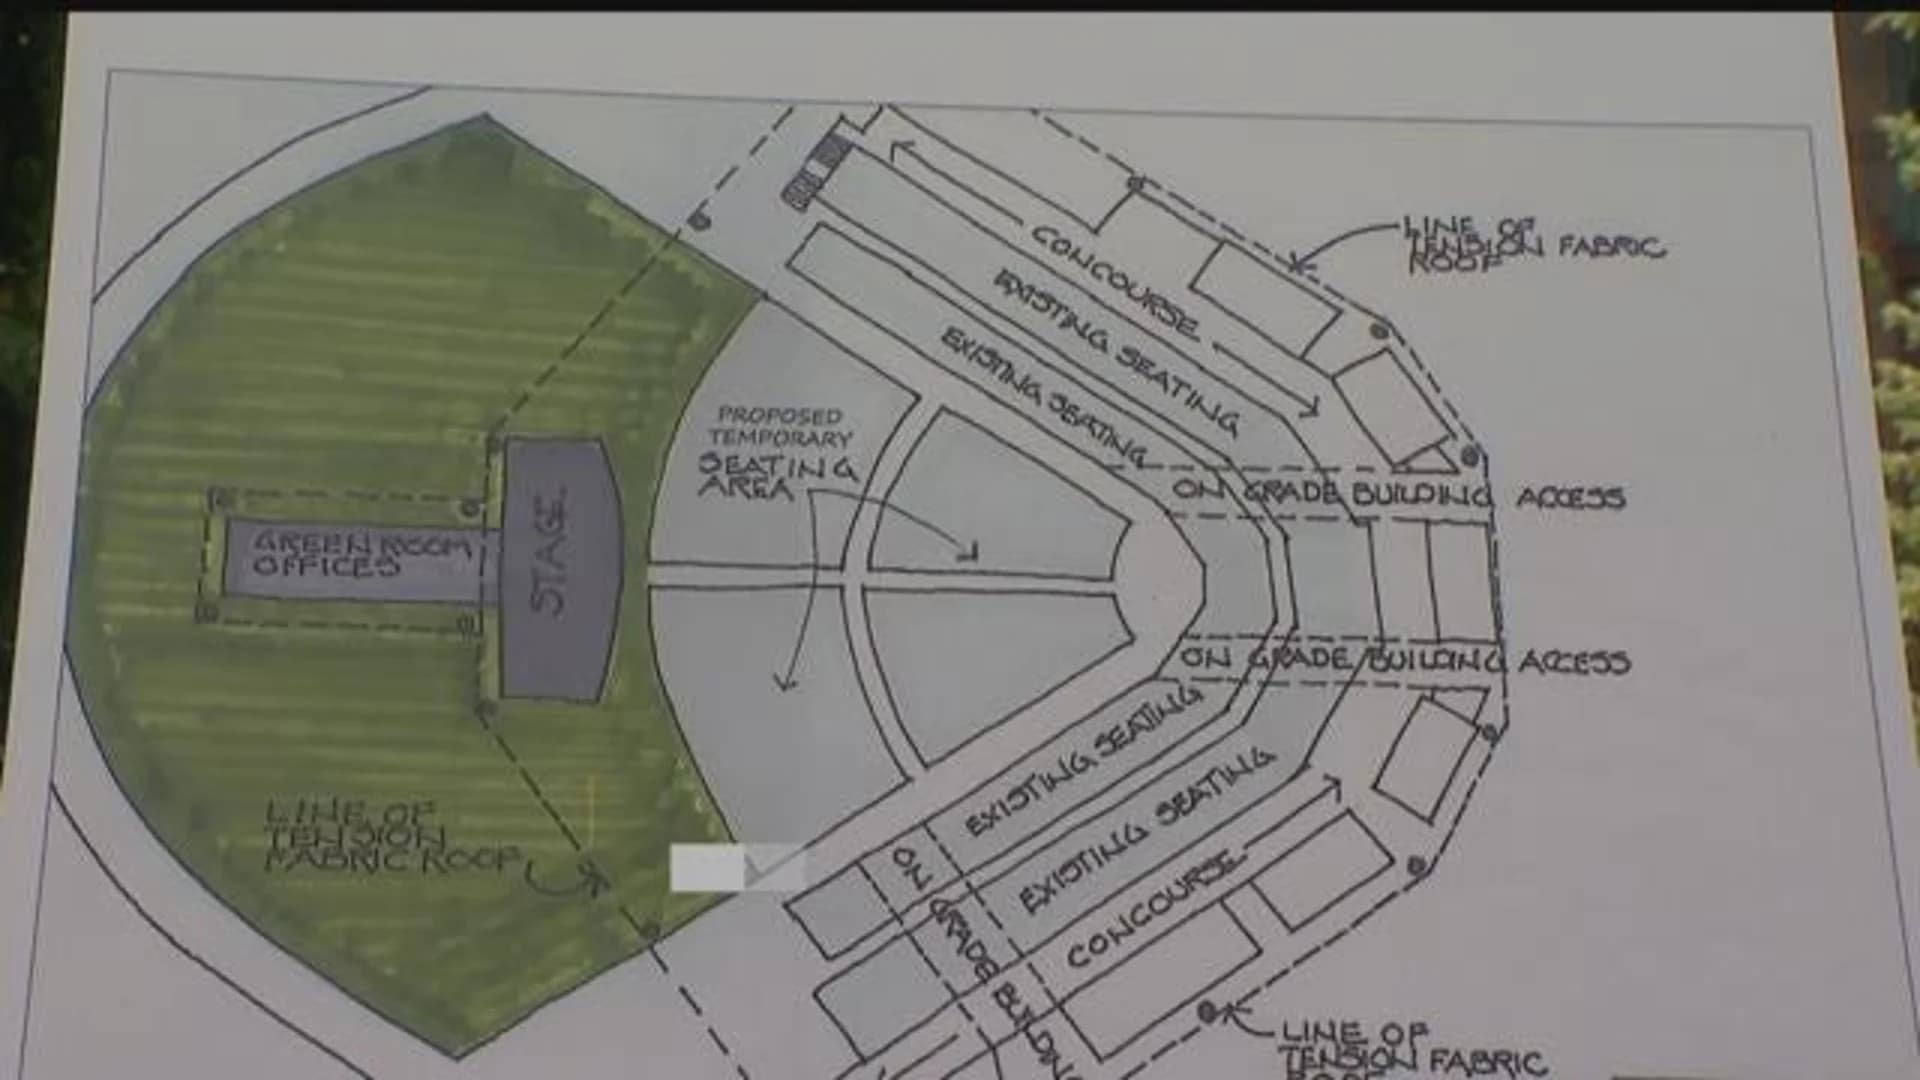 Developer unveils plans for Harbor Yard revamp